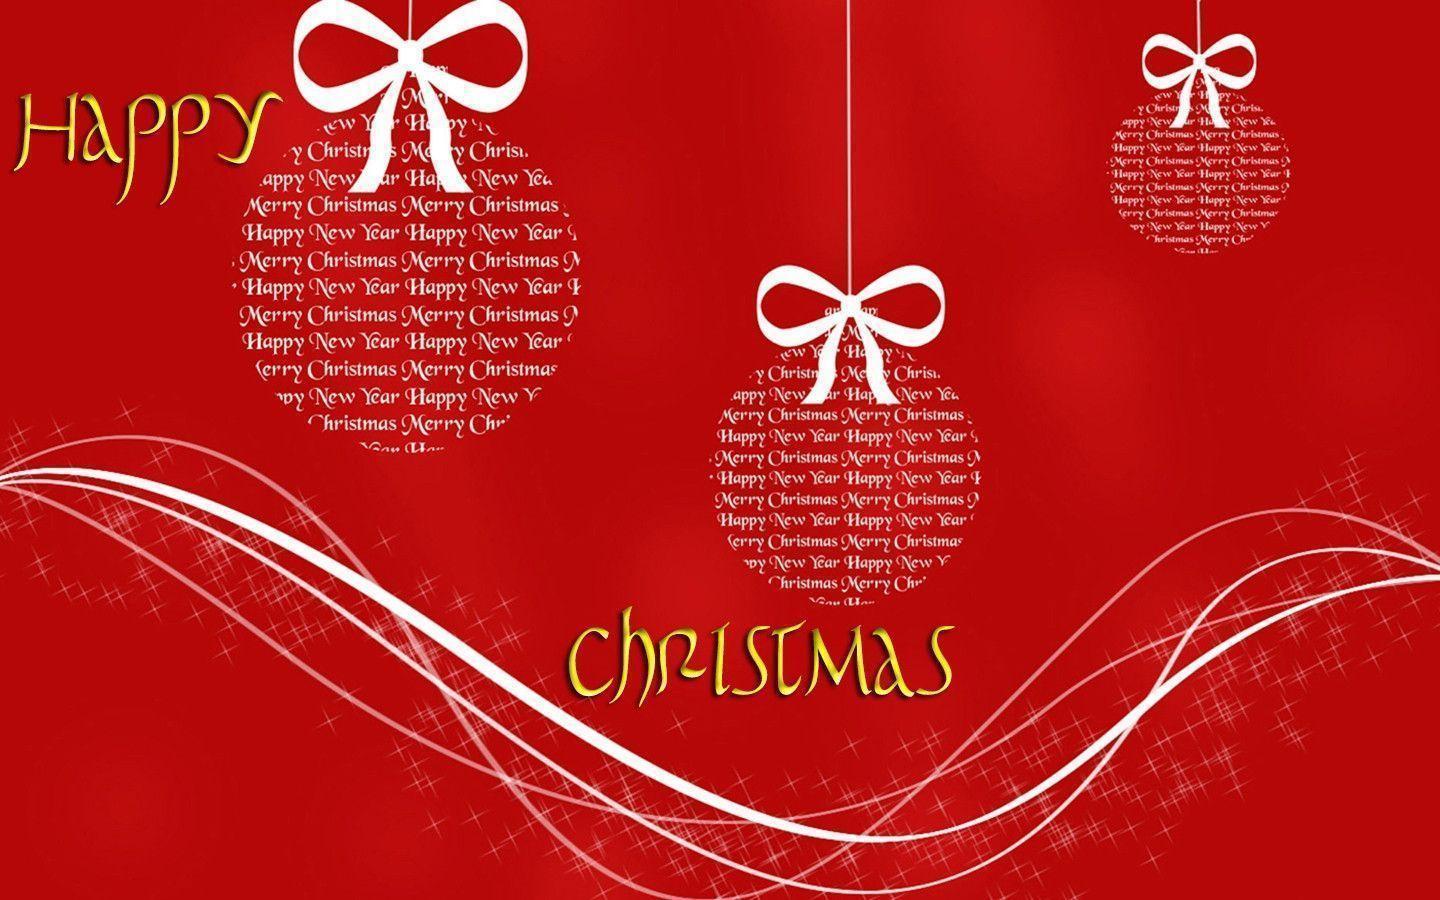 wallpaper proslut: Christian Christmas Photo Greetings Cards Free